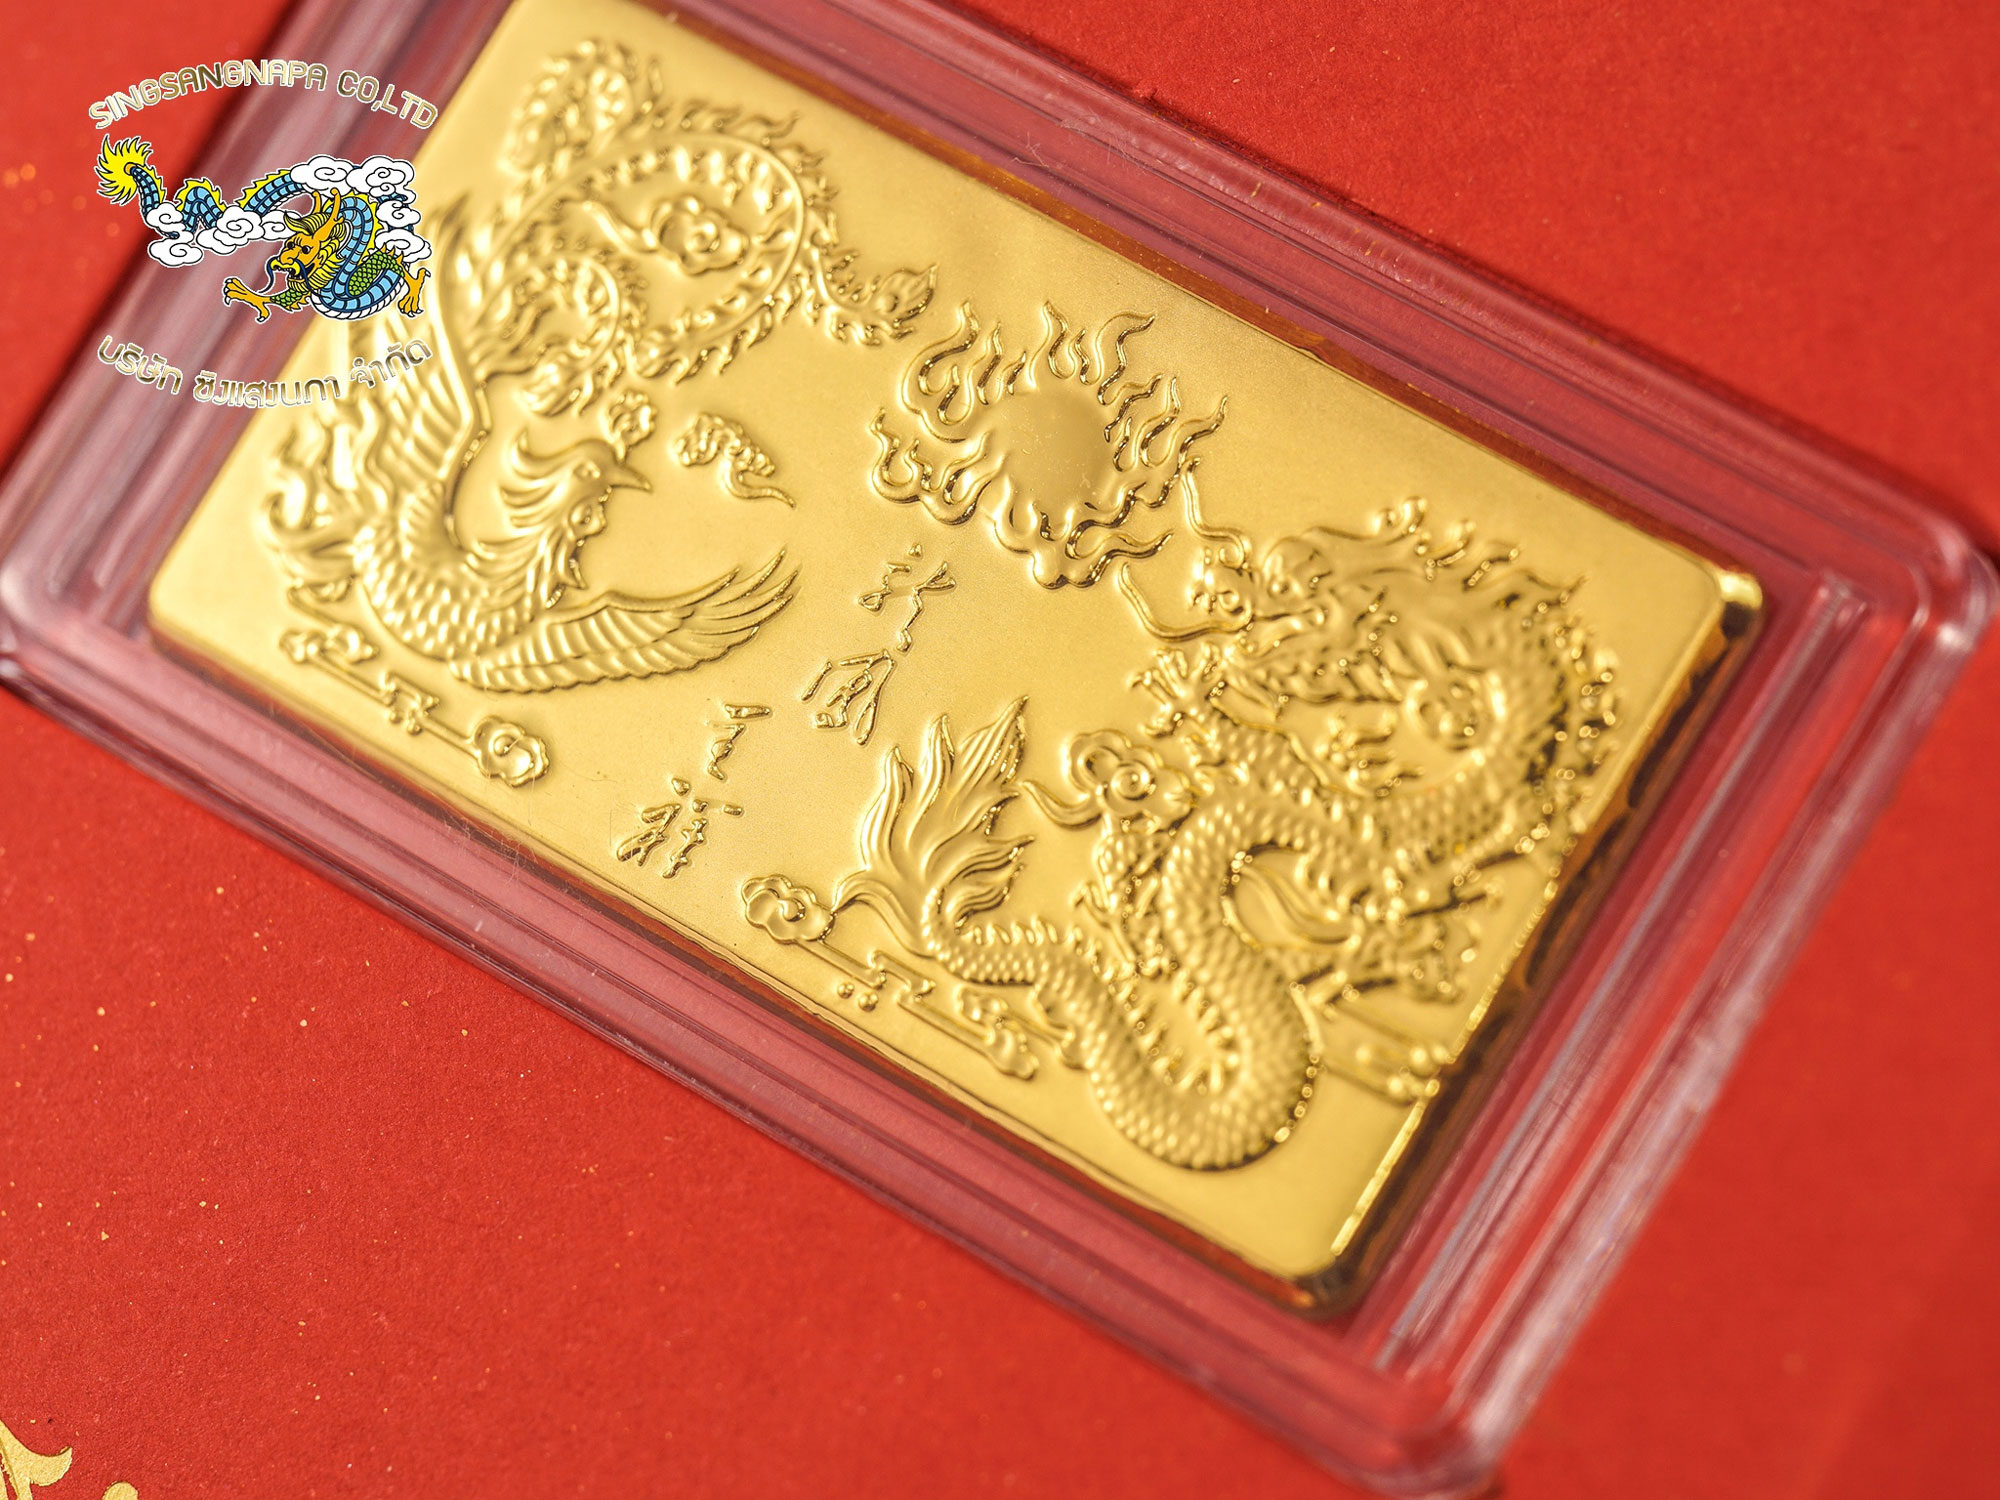 SSNP GOLD 7 ทองคำแผ่นแท้ 99.99% แผ่นทองมงคลลายหงส์-มังกร ของขวัญเทศกาลปีใหม่ พร้อมใบรับประกันทอง